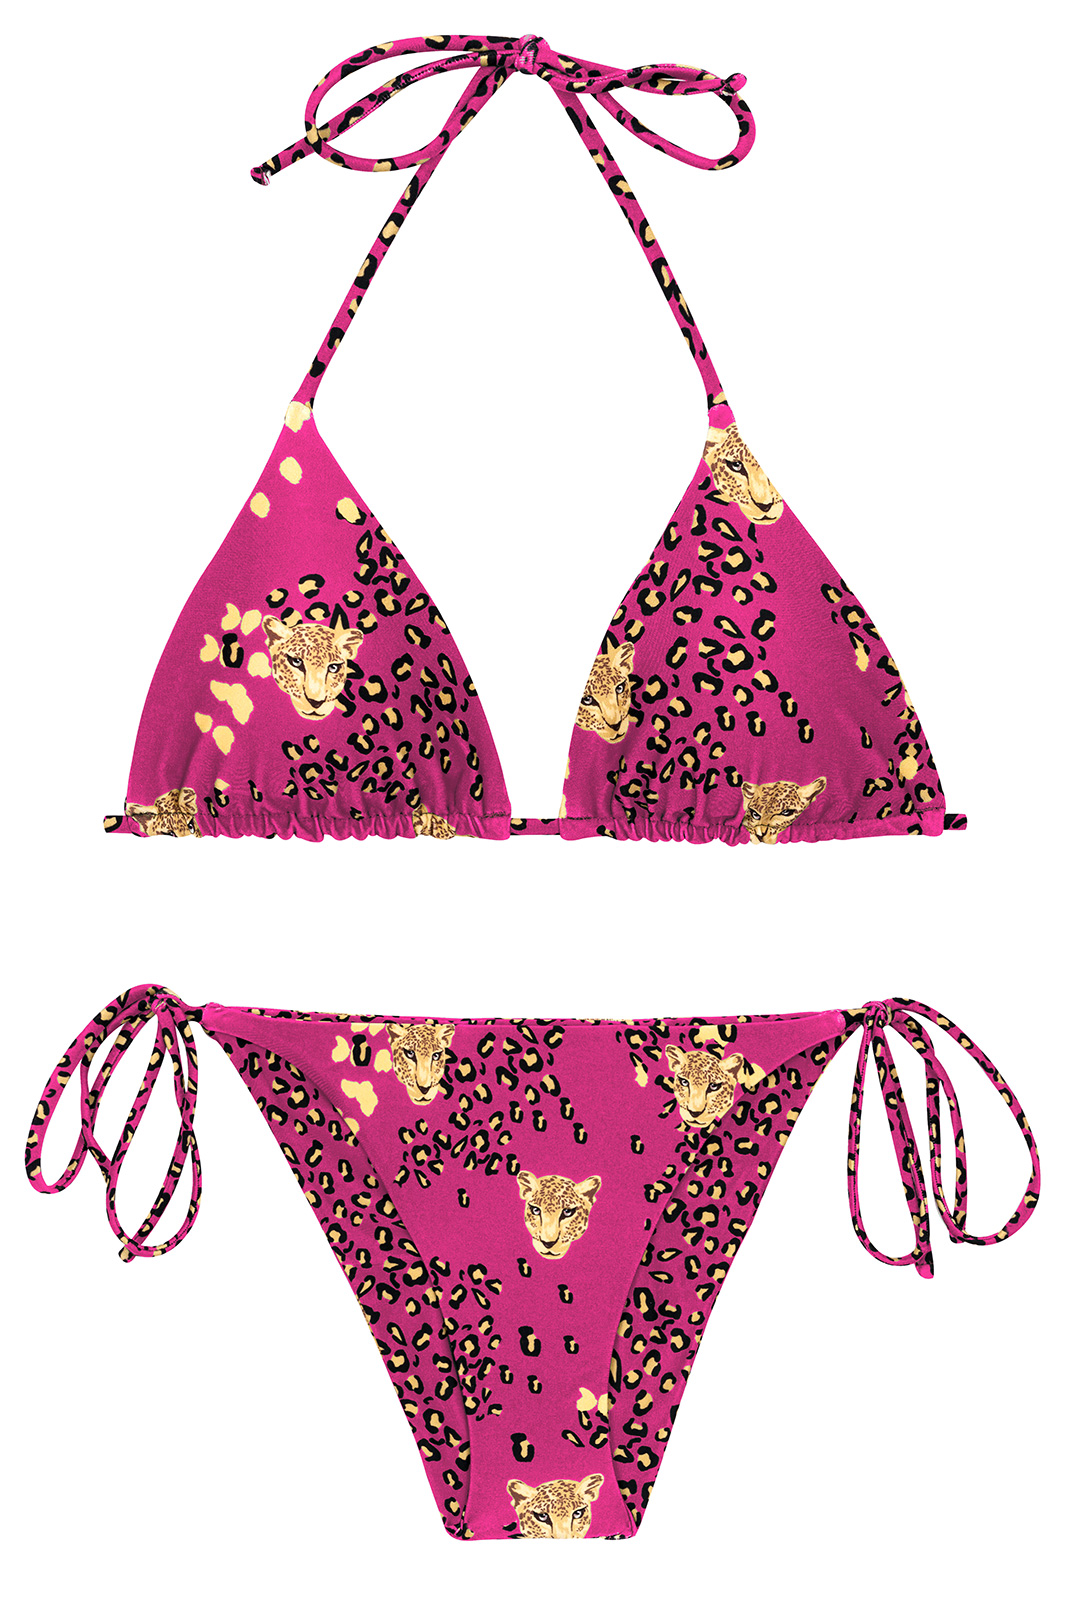 vezel Evalueerbaar vleet Pink Leopard Print Side-tie Bikini - Set Roar-pink Tri-inv Ibiza-comfy -  Rio de Sol